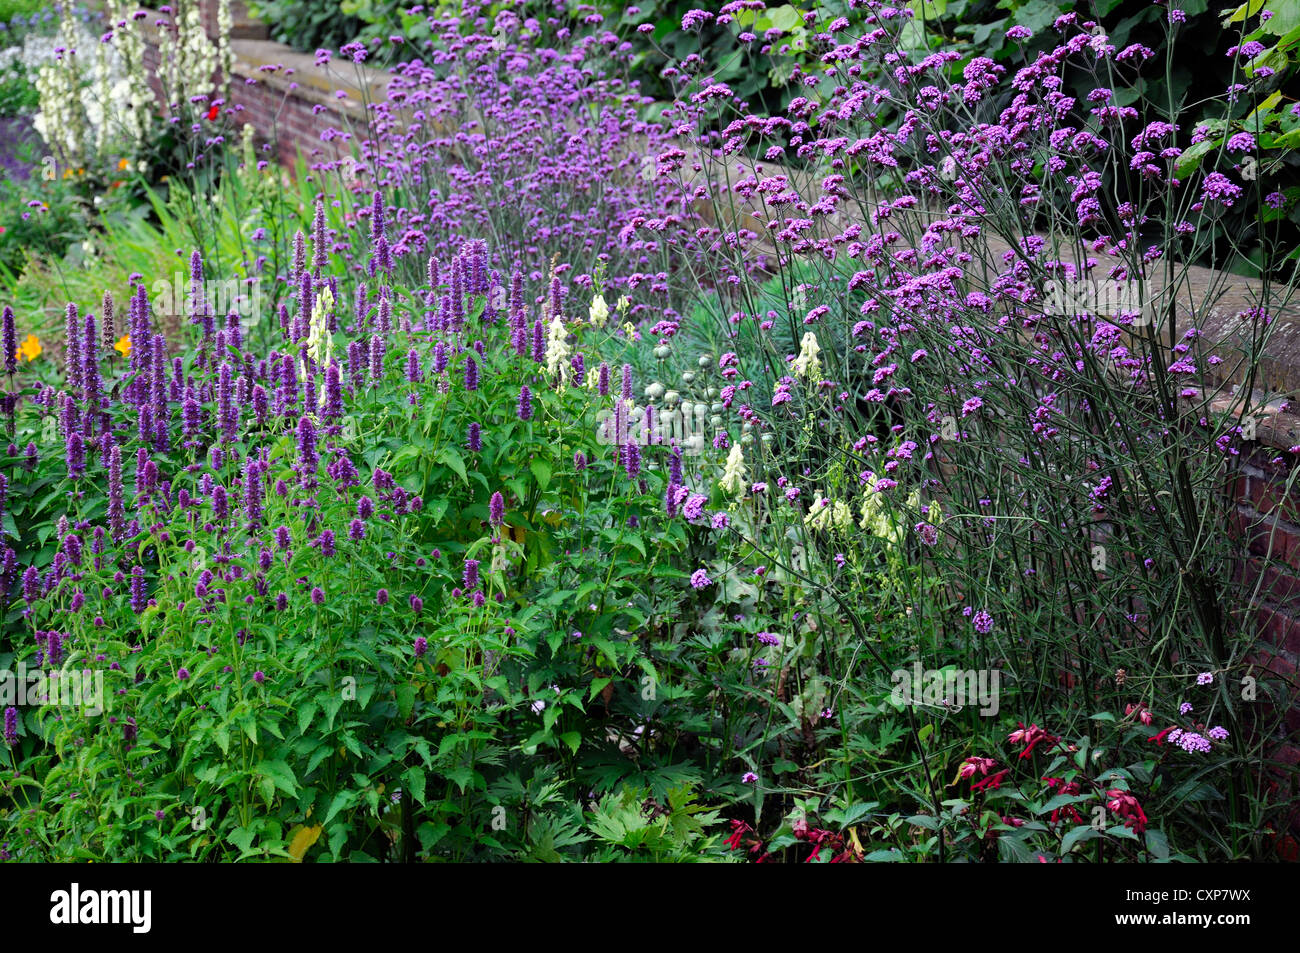 kensington palace sunken garden summer flowering verbena salvia aconitum alba Stock Photo